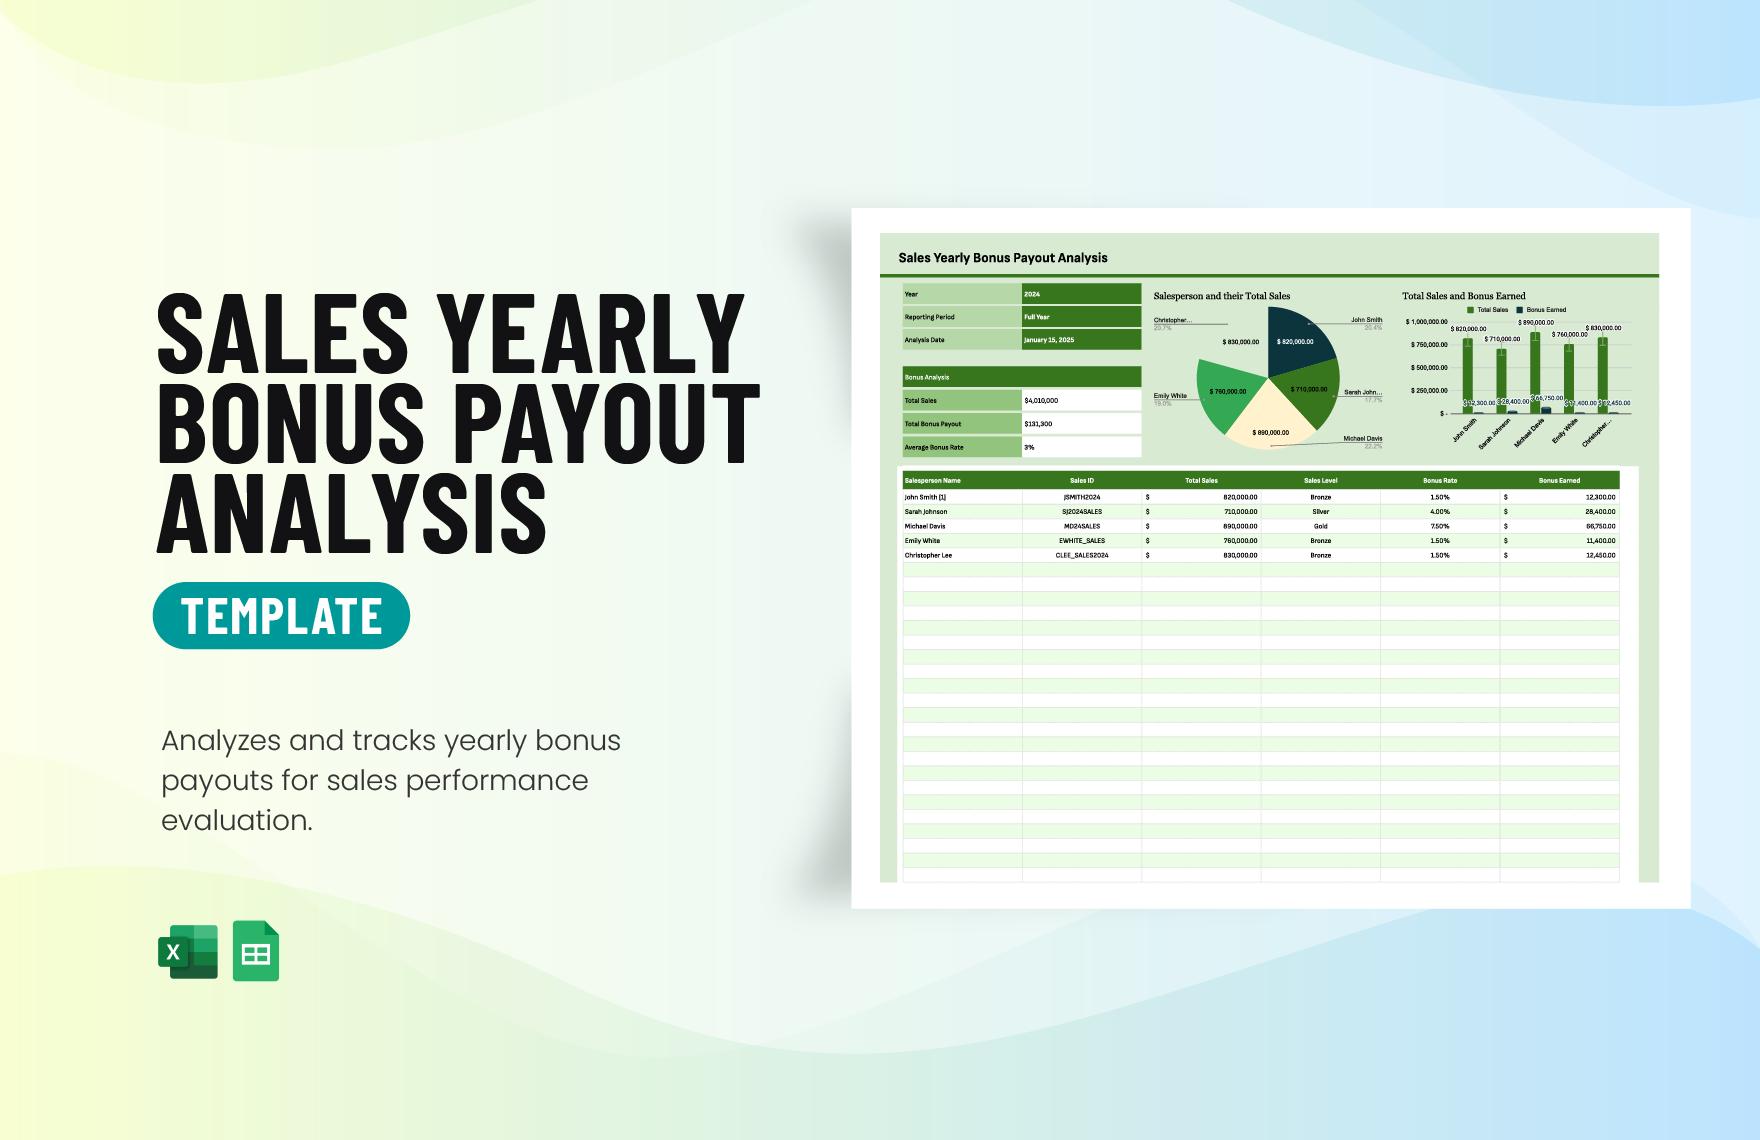 Sales Yearly Bonus Payout Analysis Template